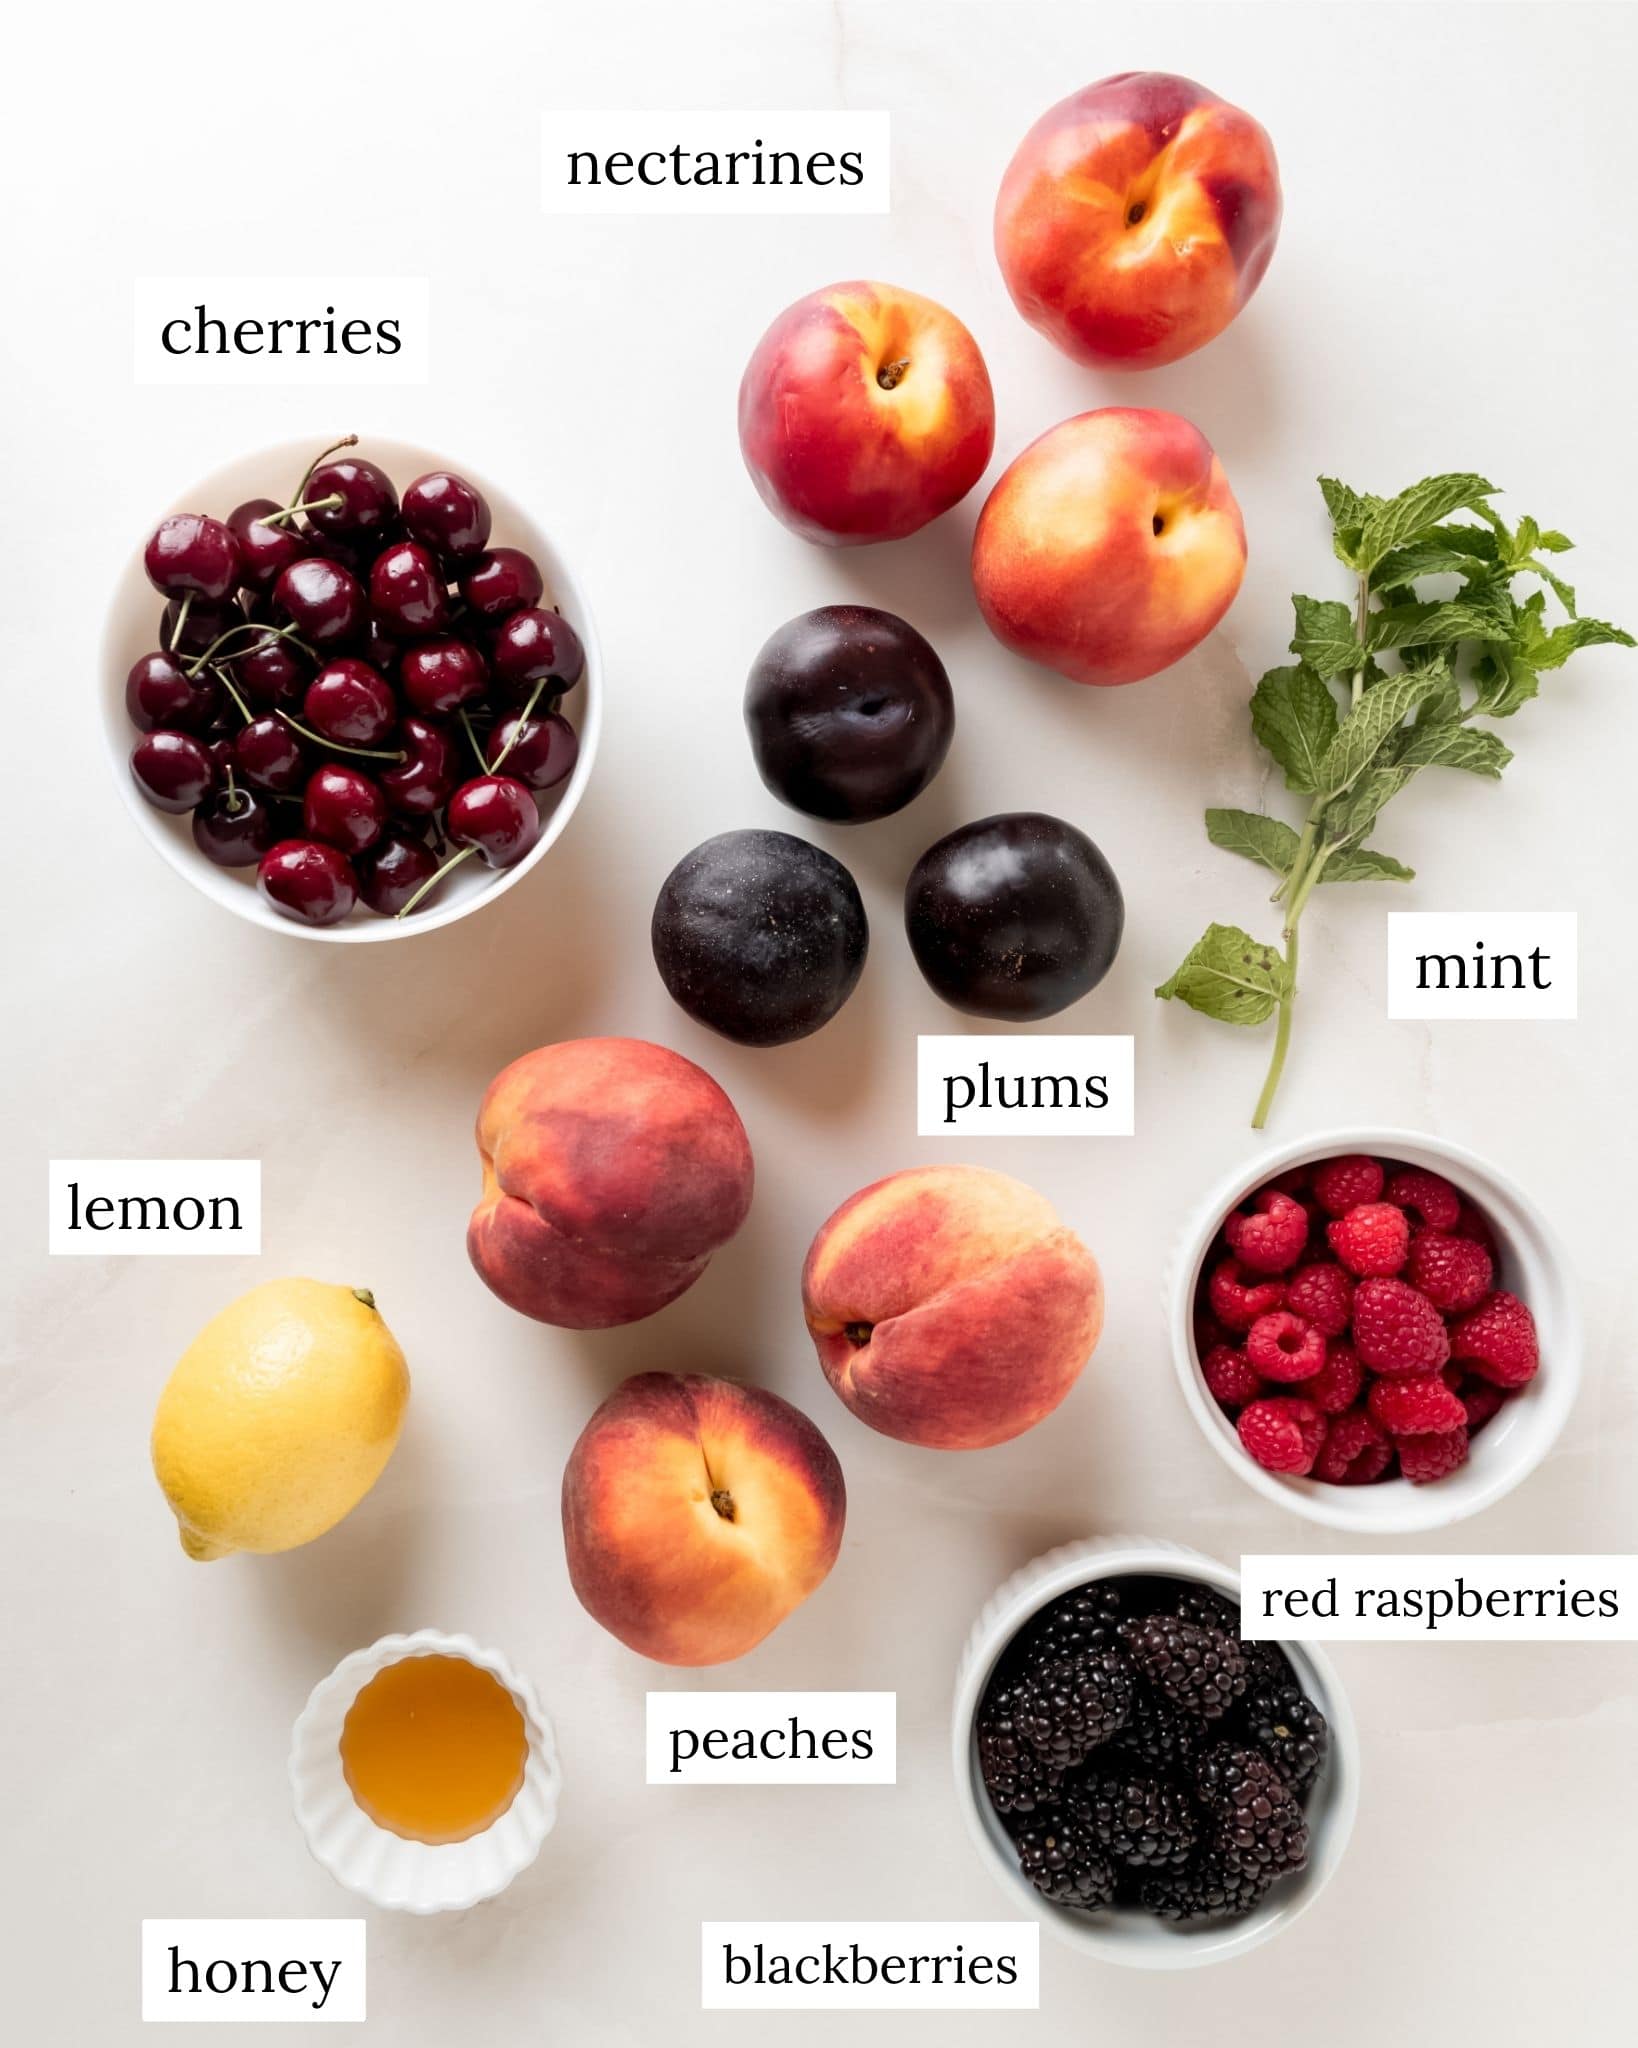 Ingredient shot of stone fruit featuring plums, nectarines, peaches, cherries, raspberries, blackberries, mint, lemon, and honey.